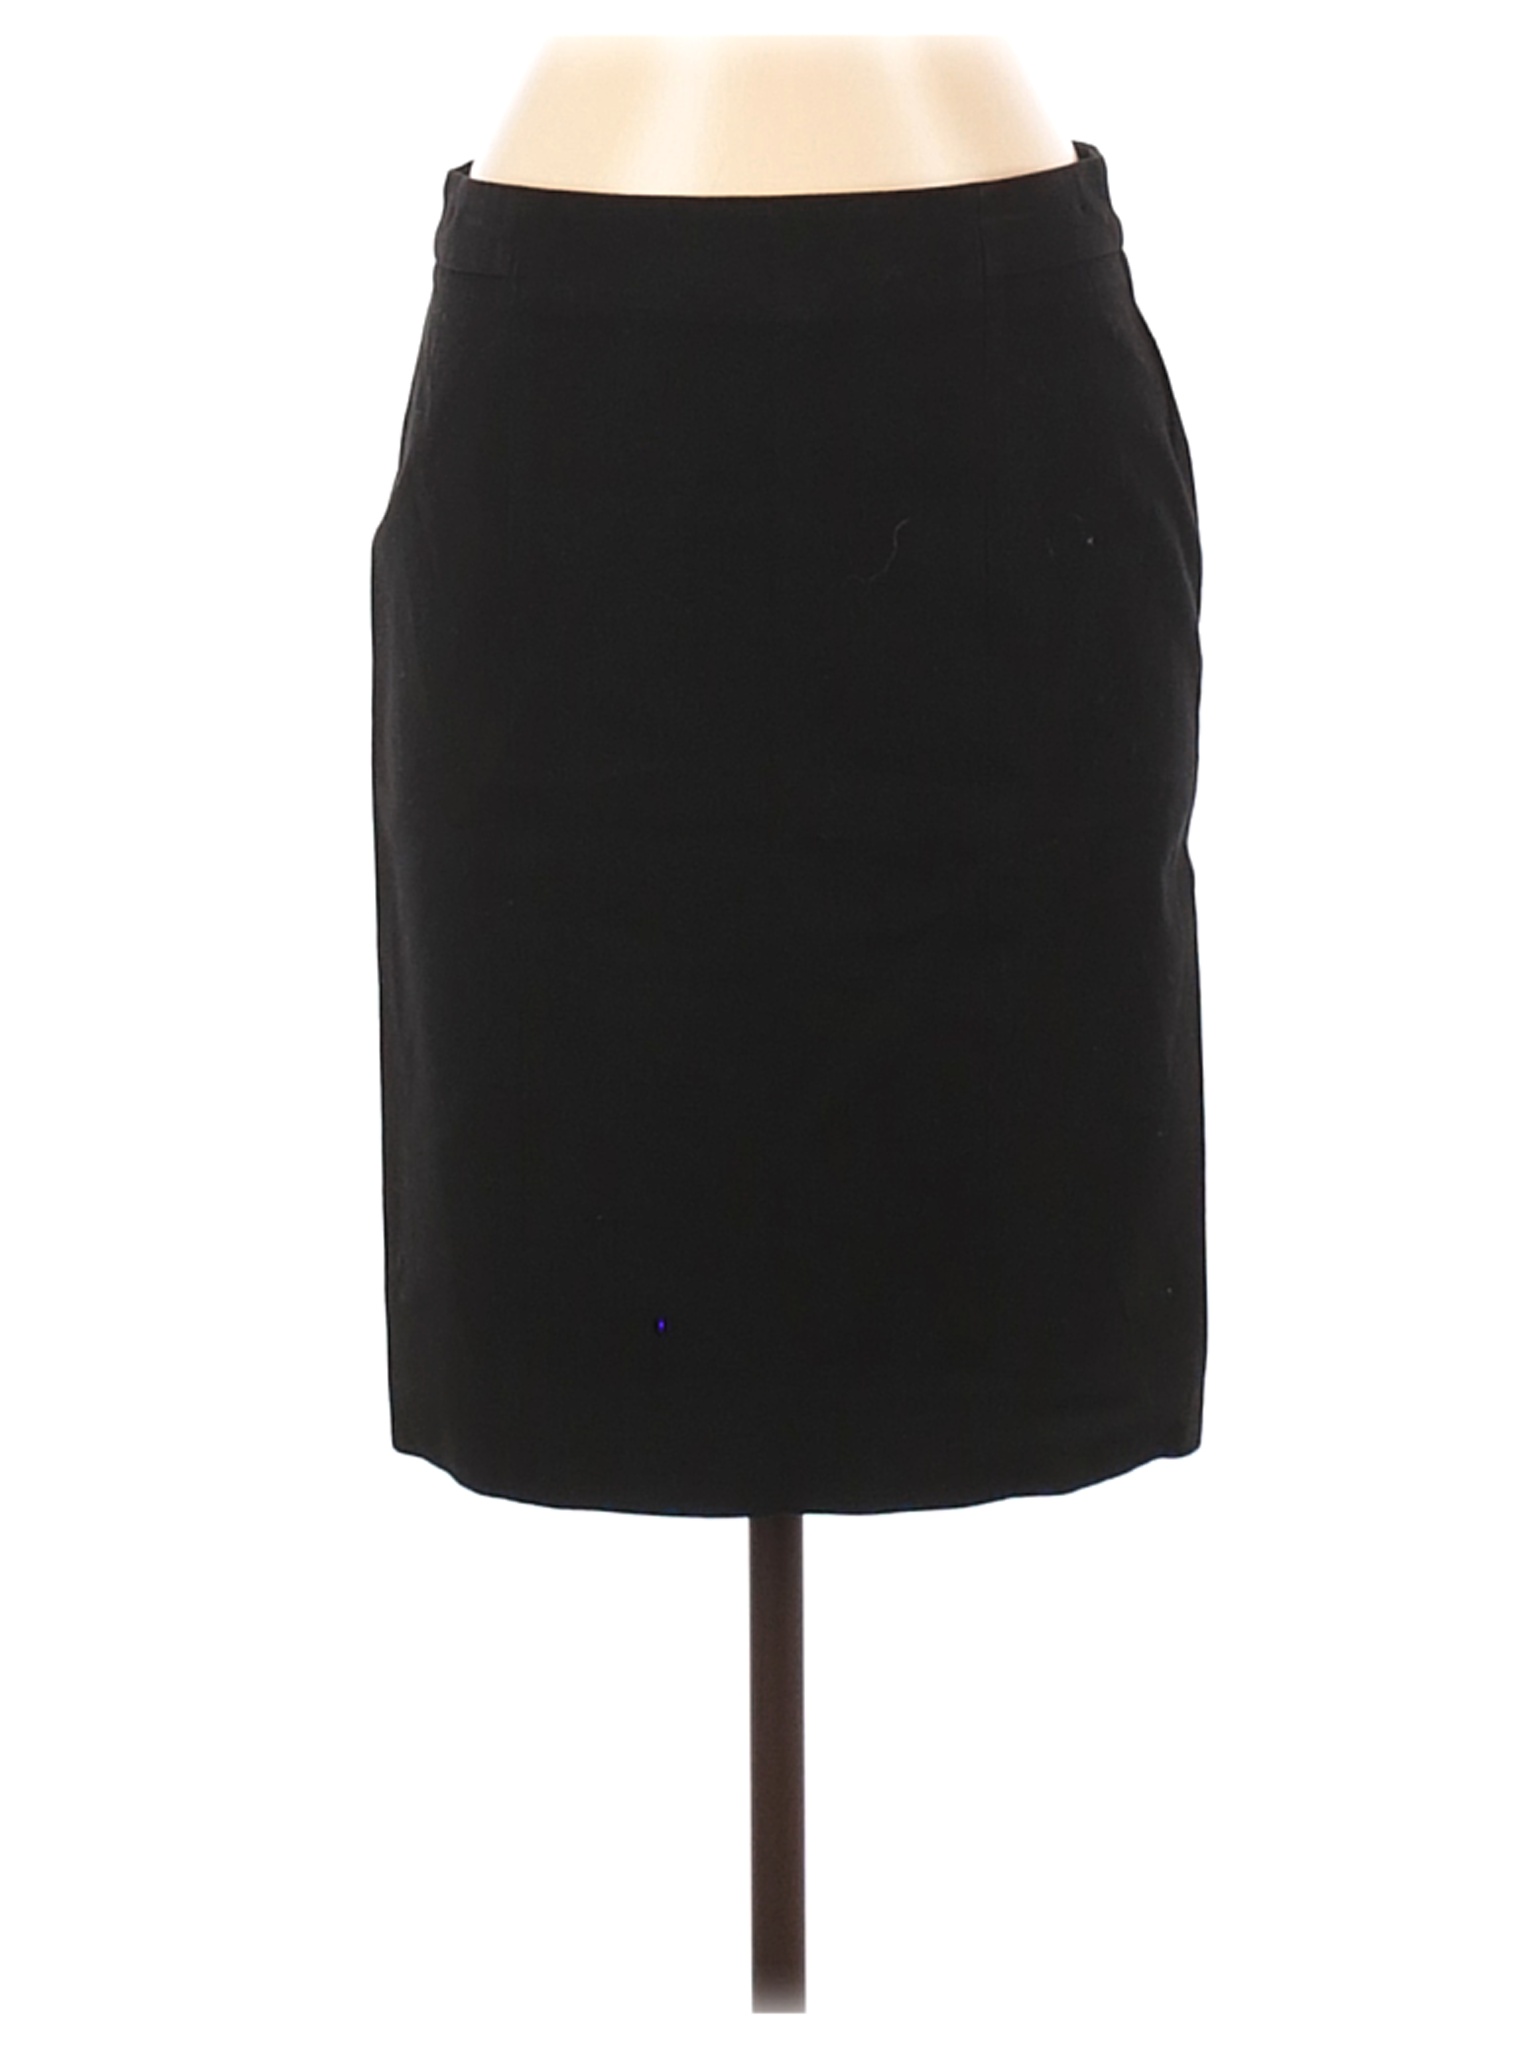 Gap Women Black Casual Skirt 2 Tall | eBay